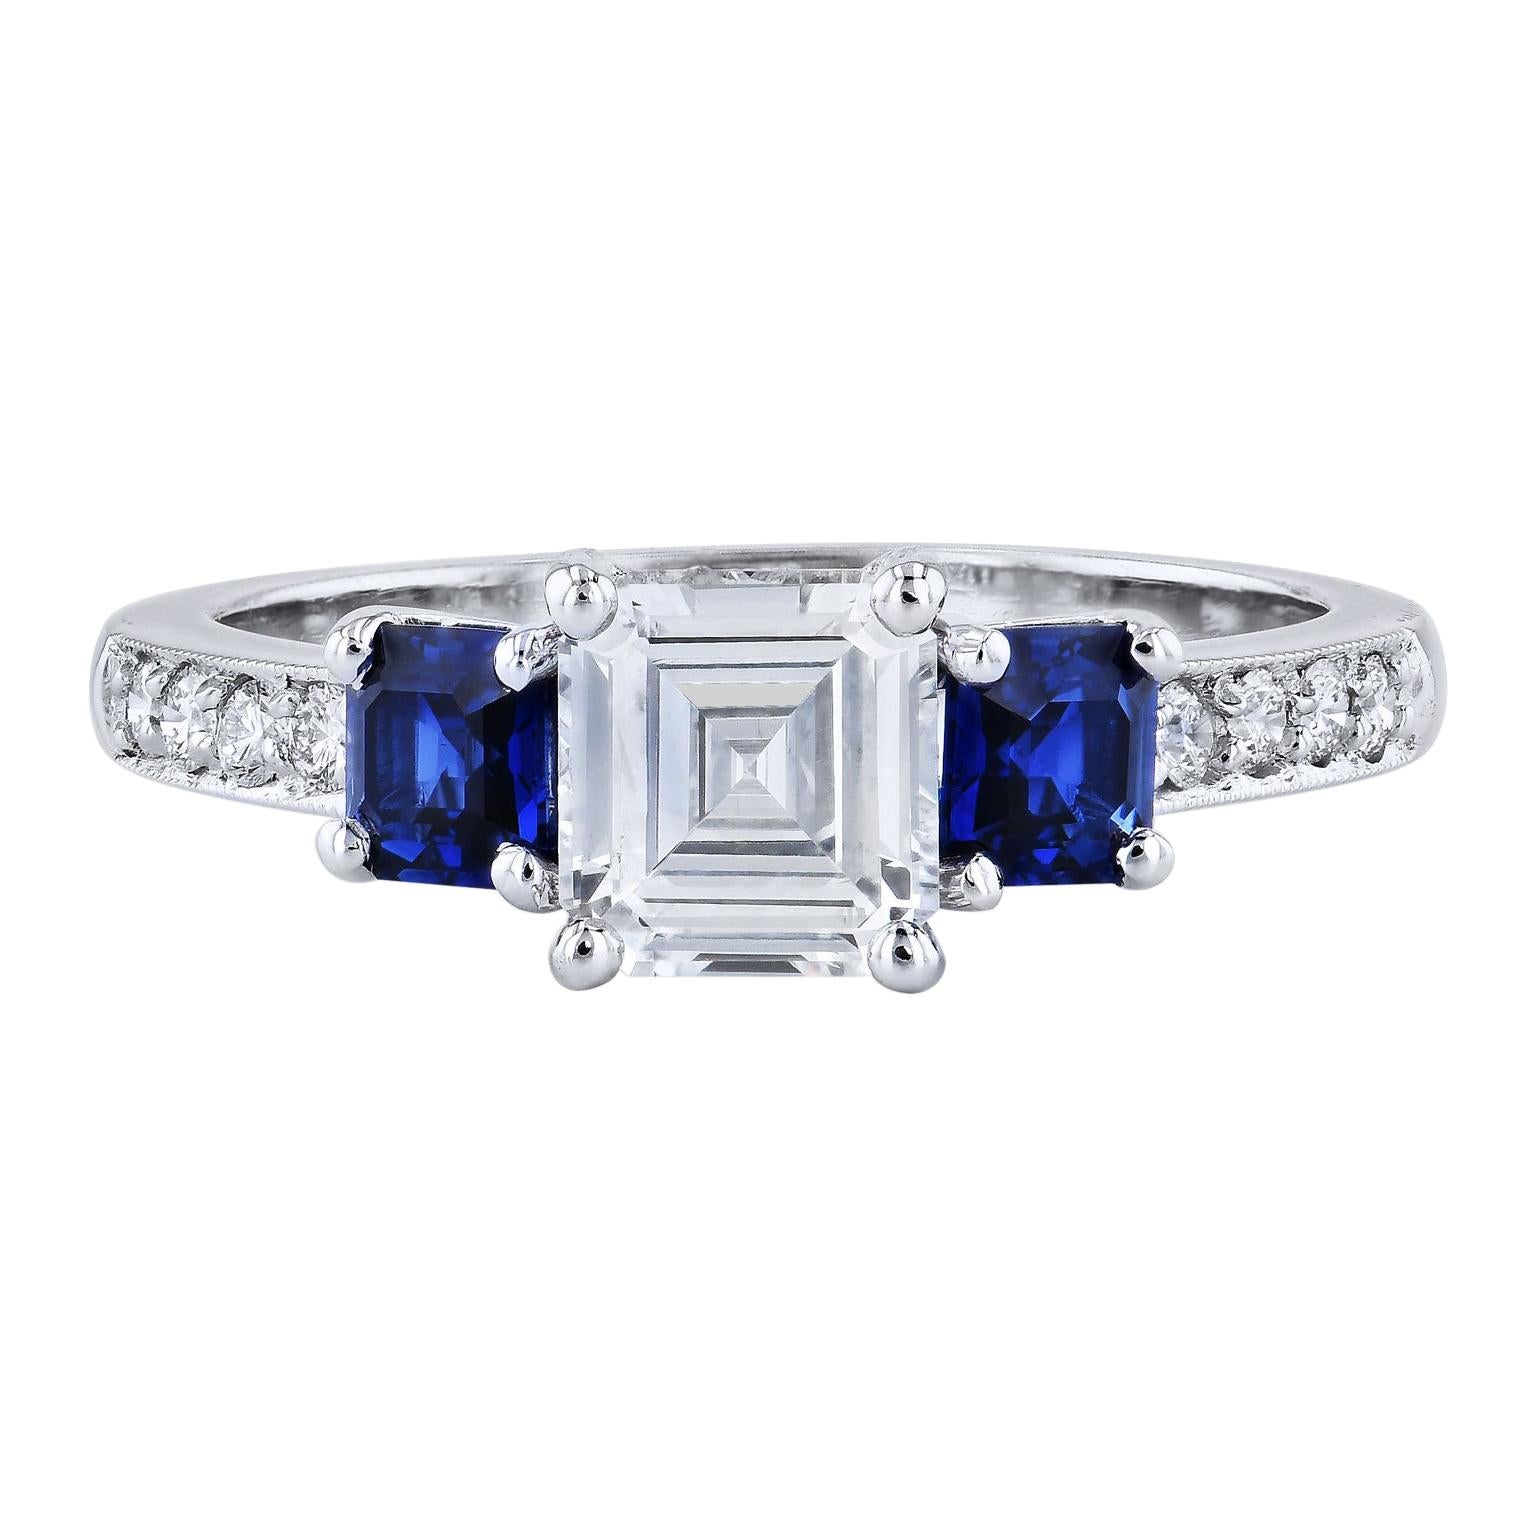 H&H GIA Cert 1.02 Carat Square Emerald Cut Diamond Ring 2 Assher Blue Sapphires